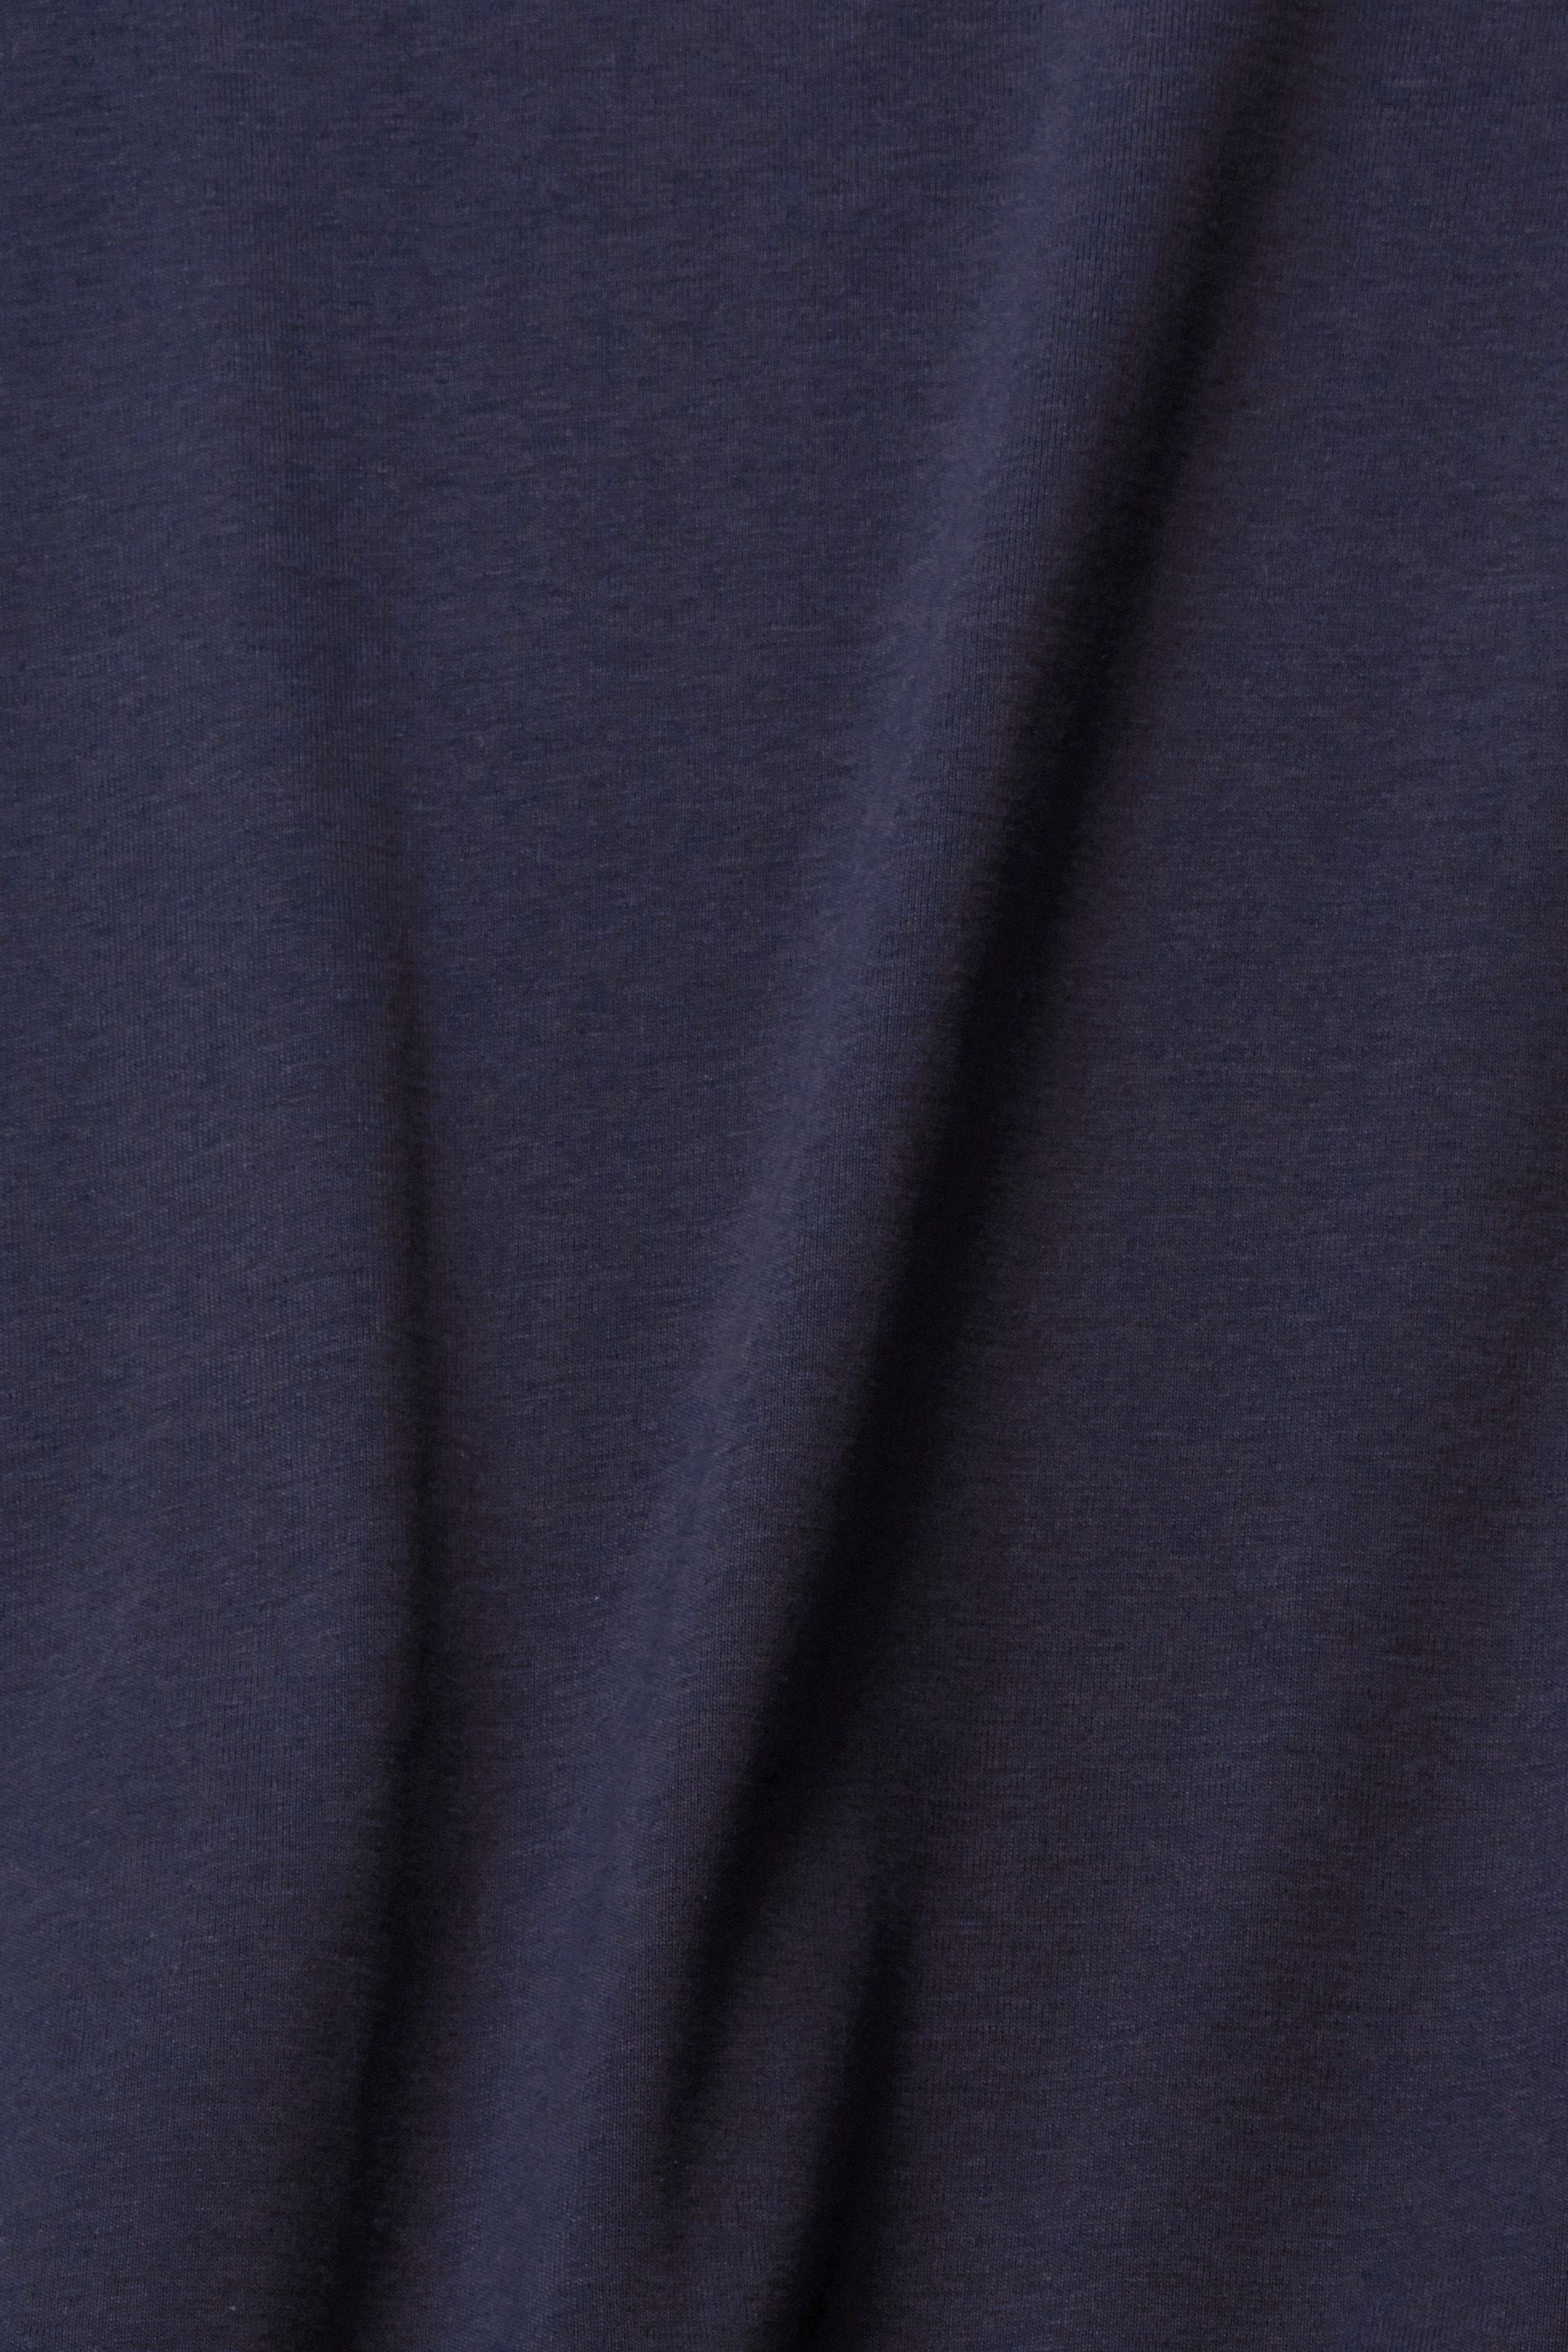 Esprit - Cotton logo T-shirt, Dark Blue, large image number 3